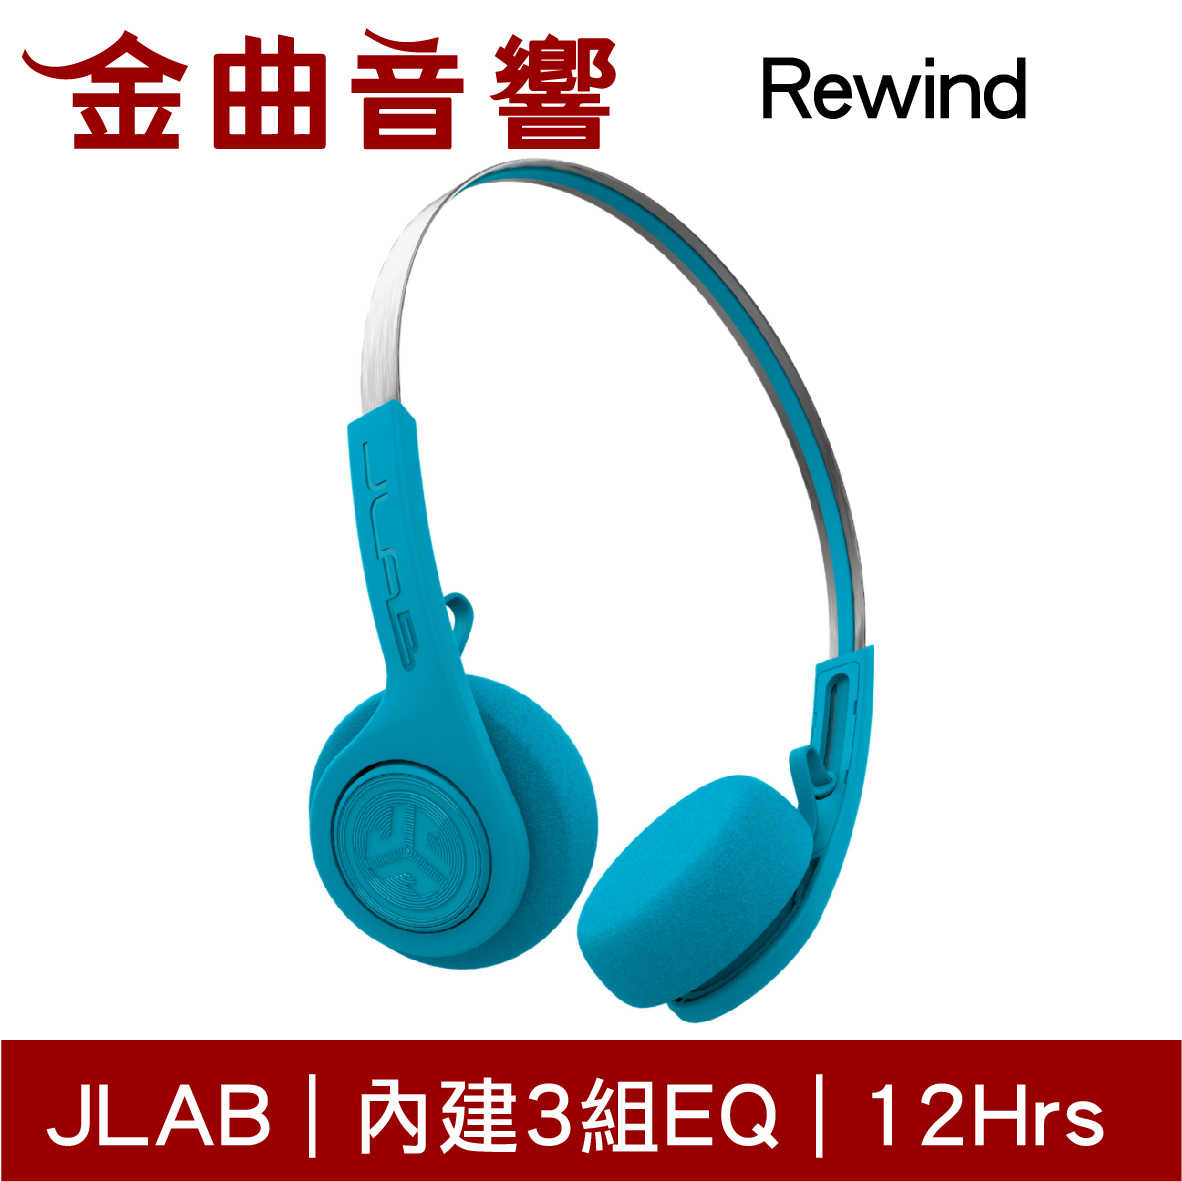 JLab Rewind 藍 藍牙耳機 可EQ調整 | 金曲音響